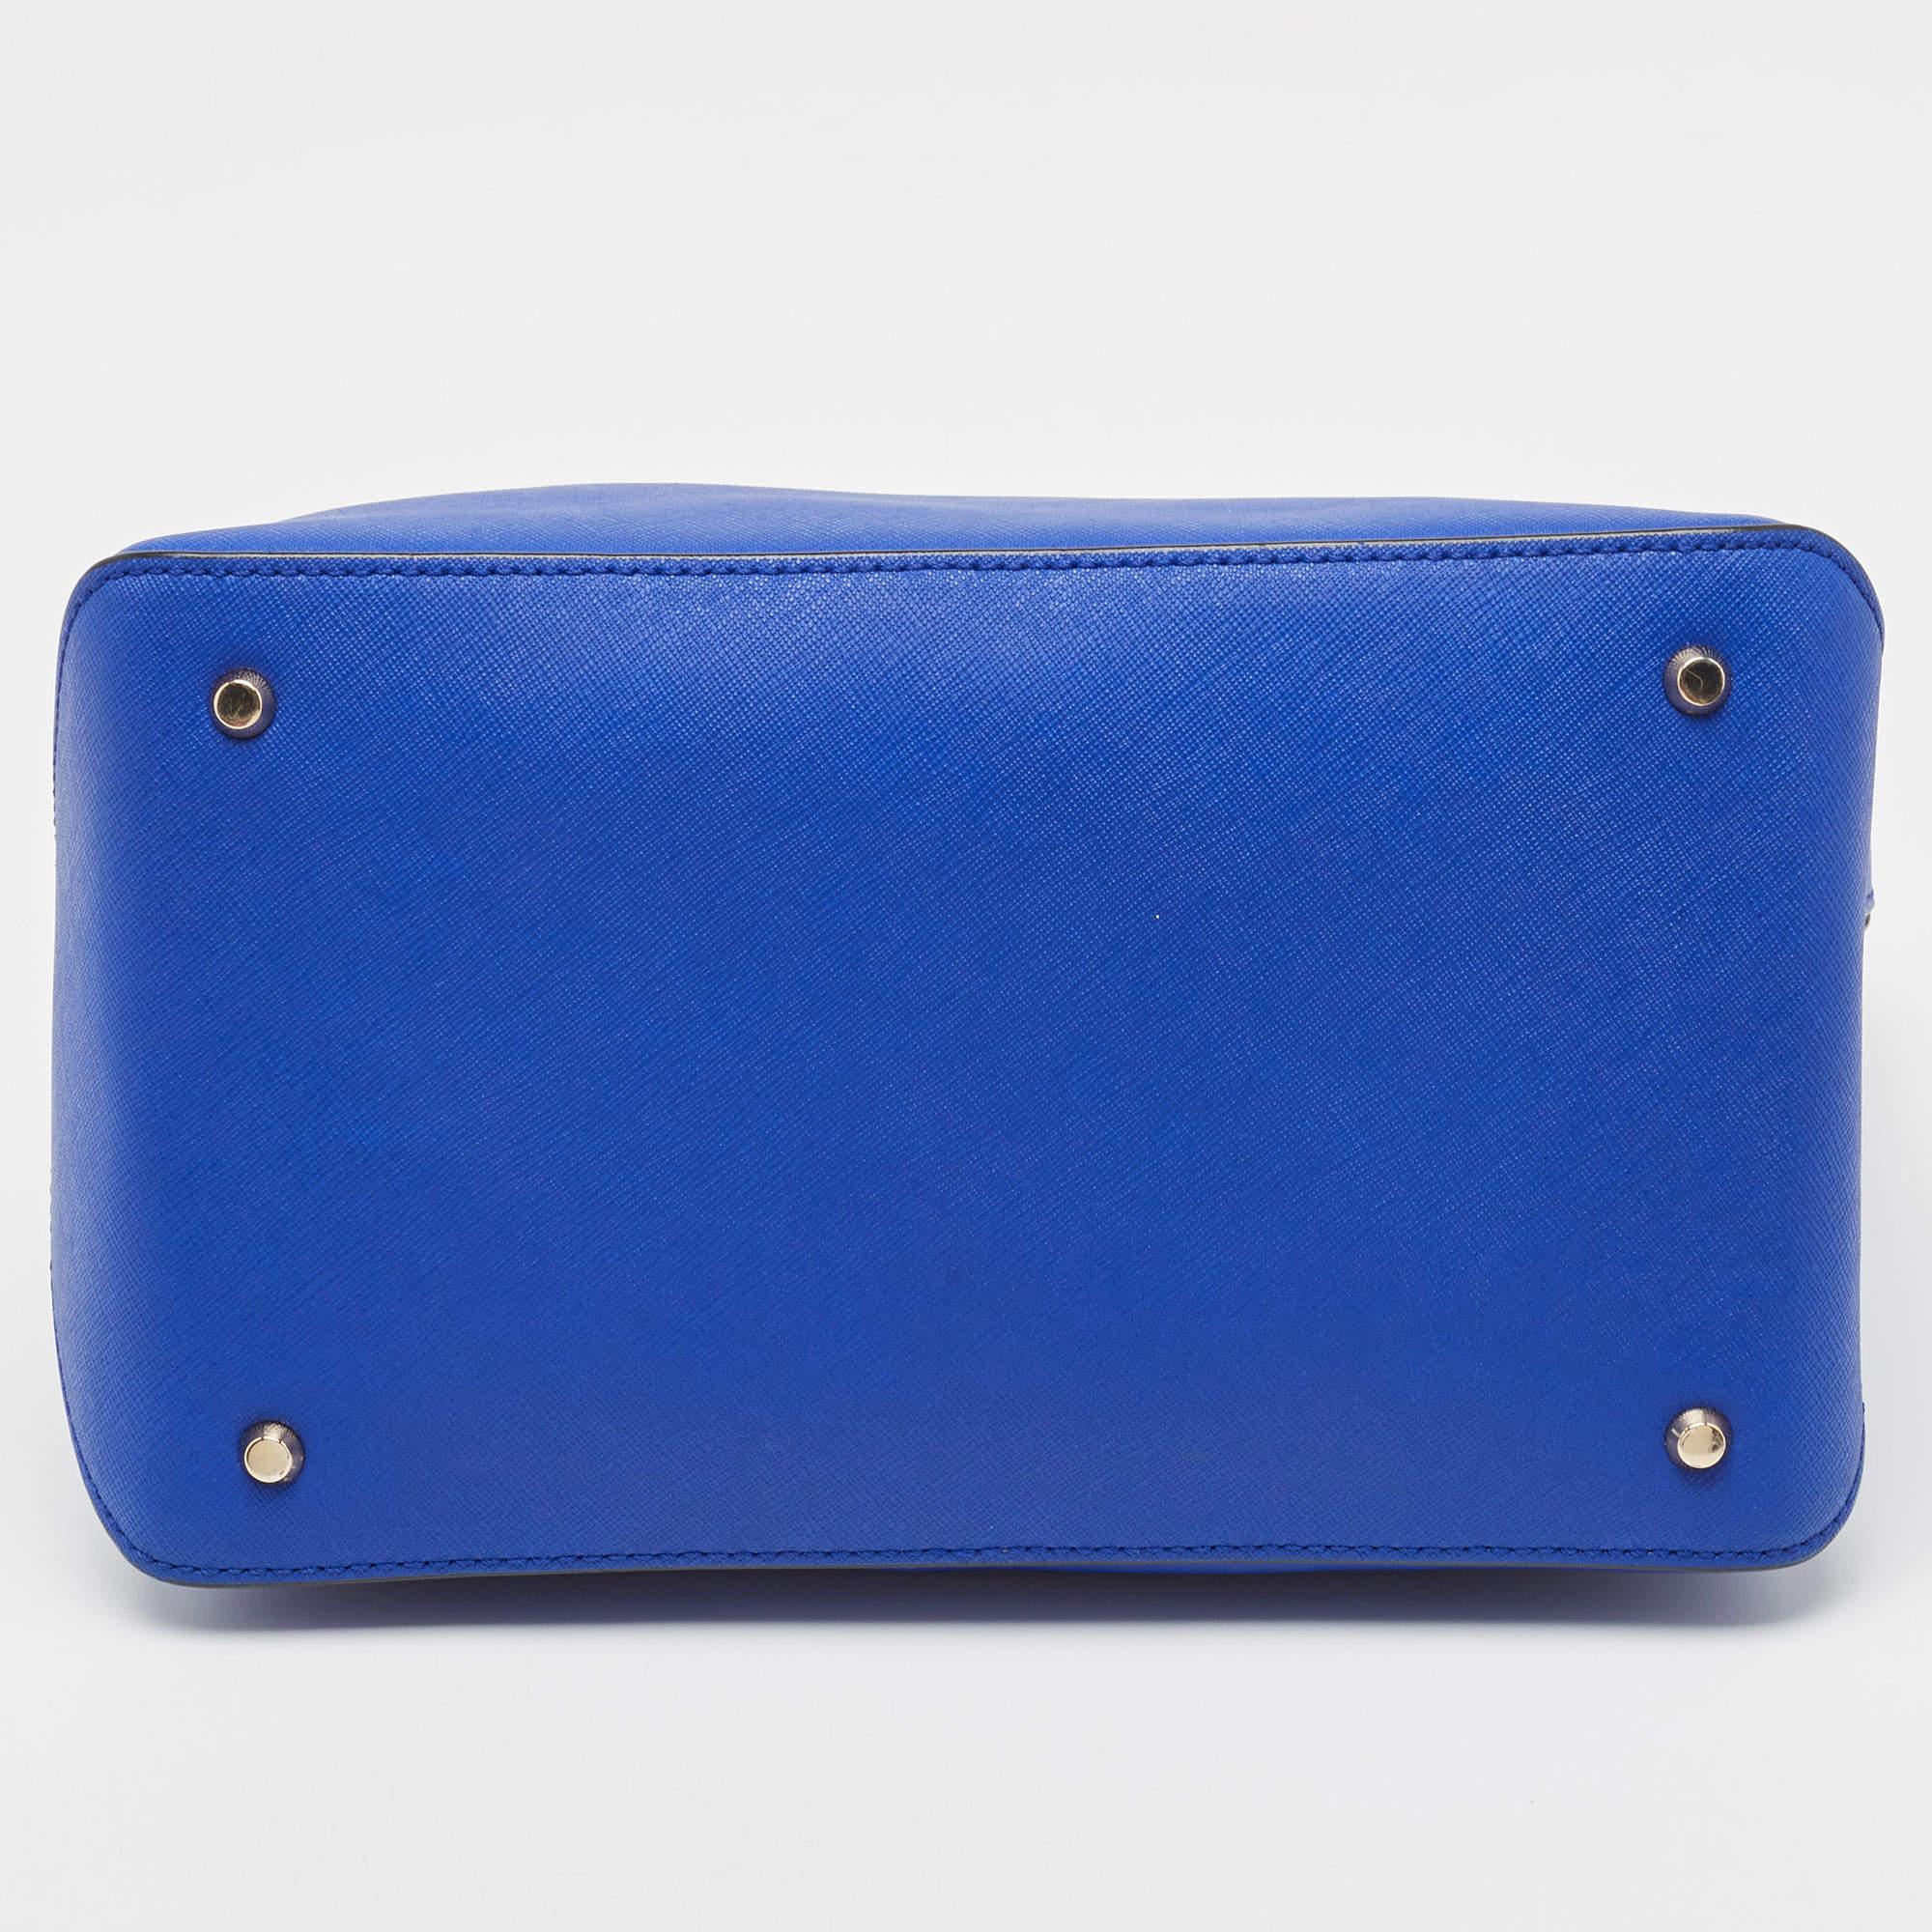 Dkny Blue Saffiano Leather Dome Shoulder Bag 1